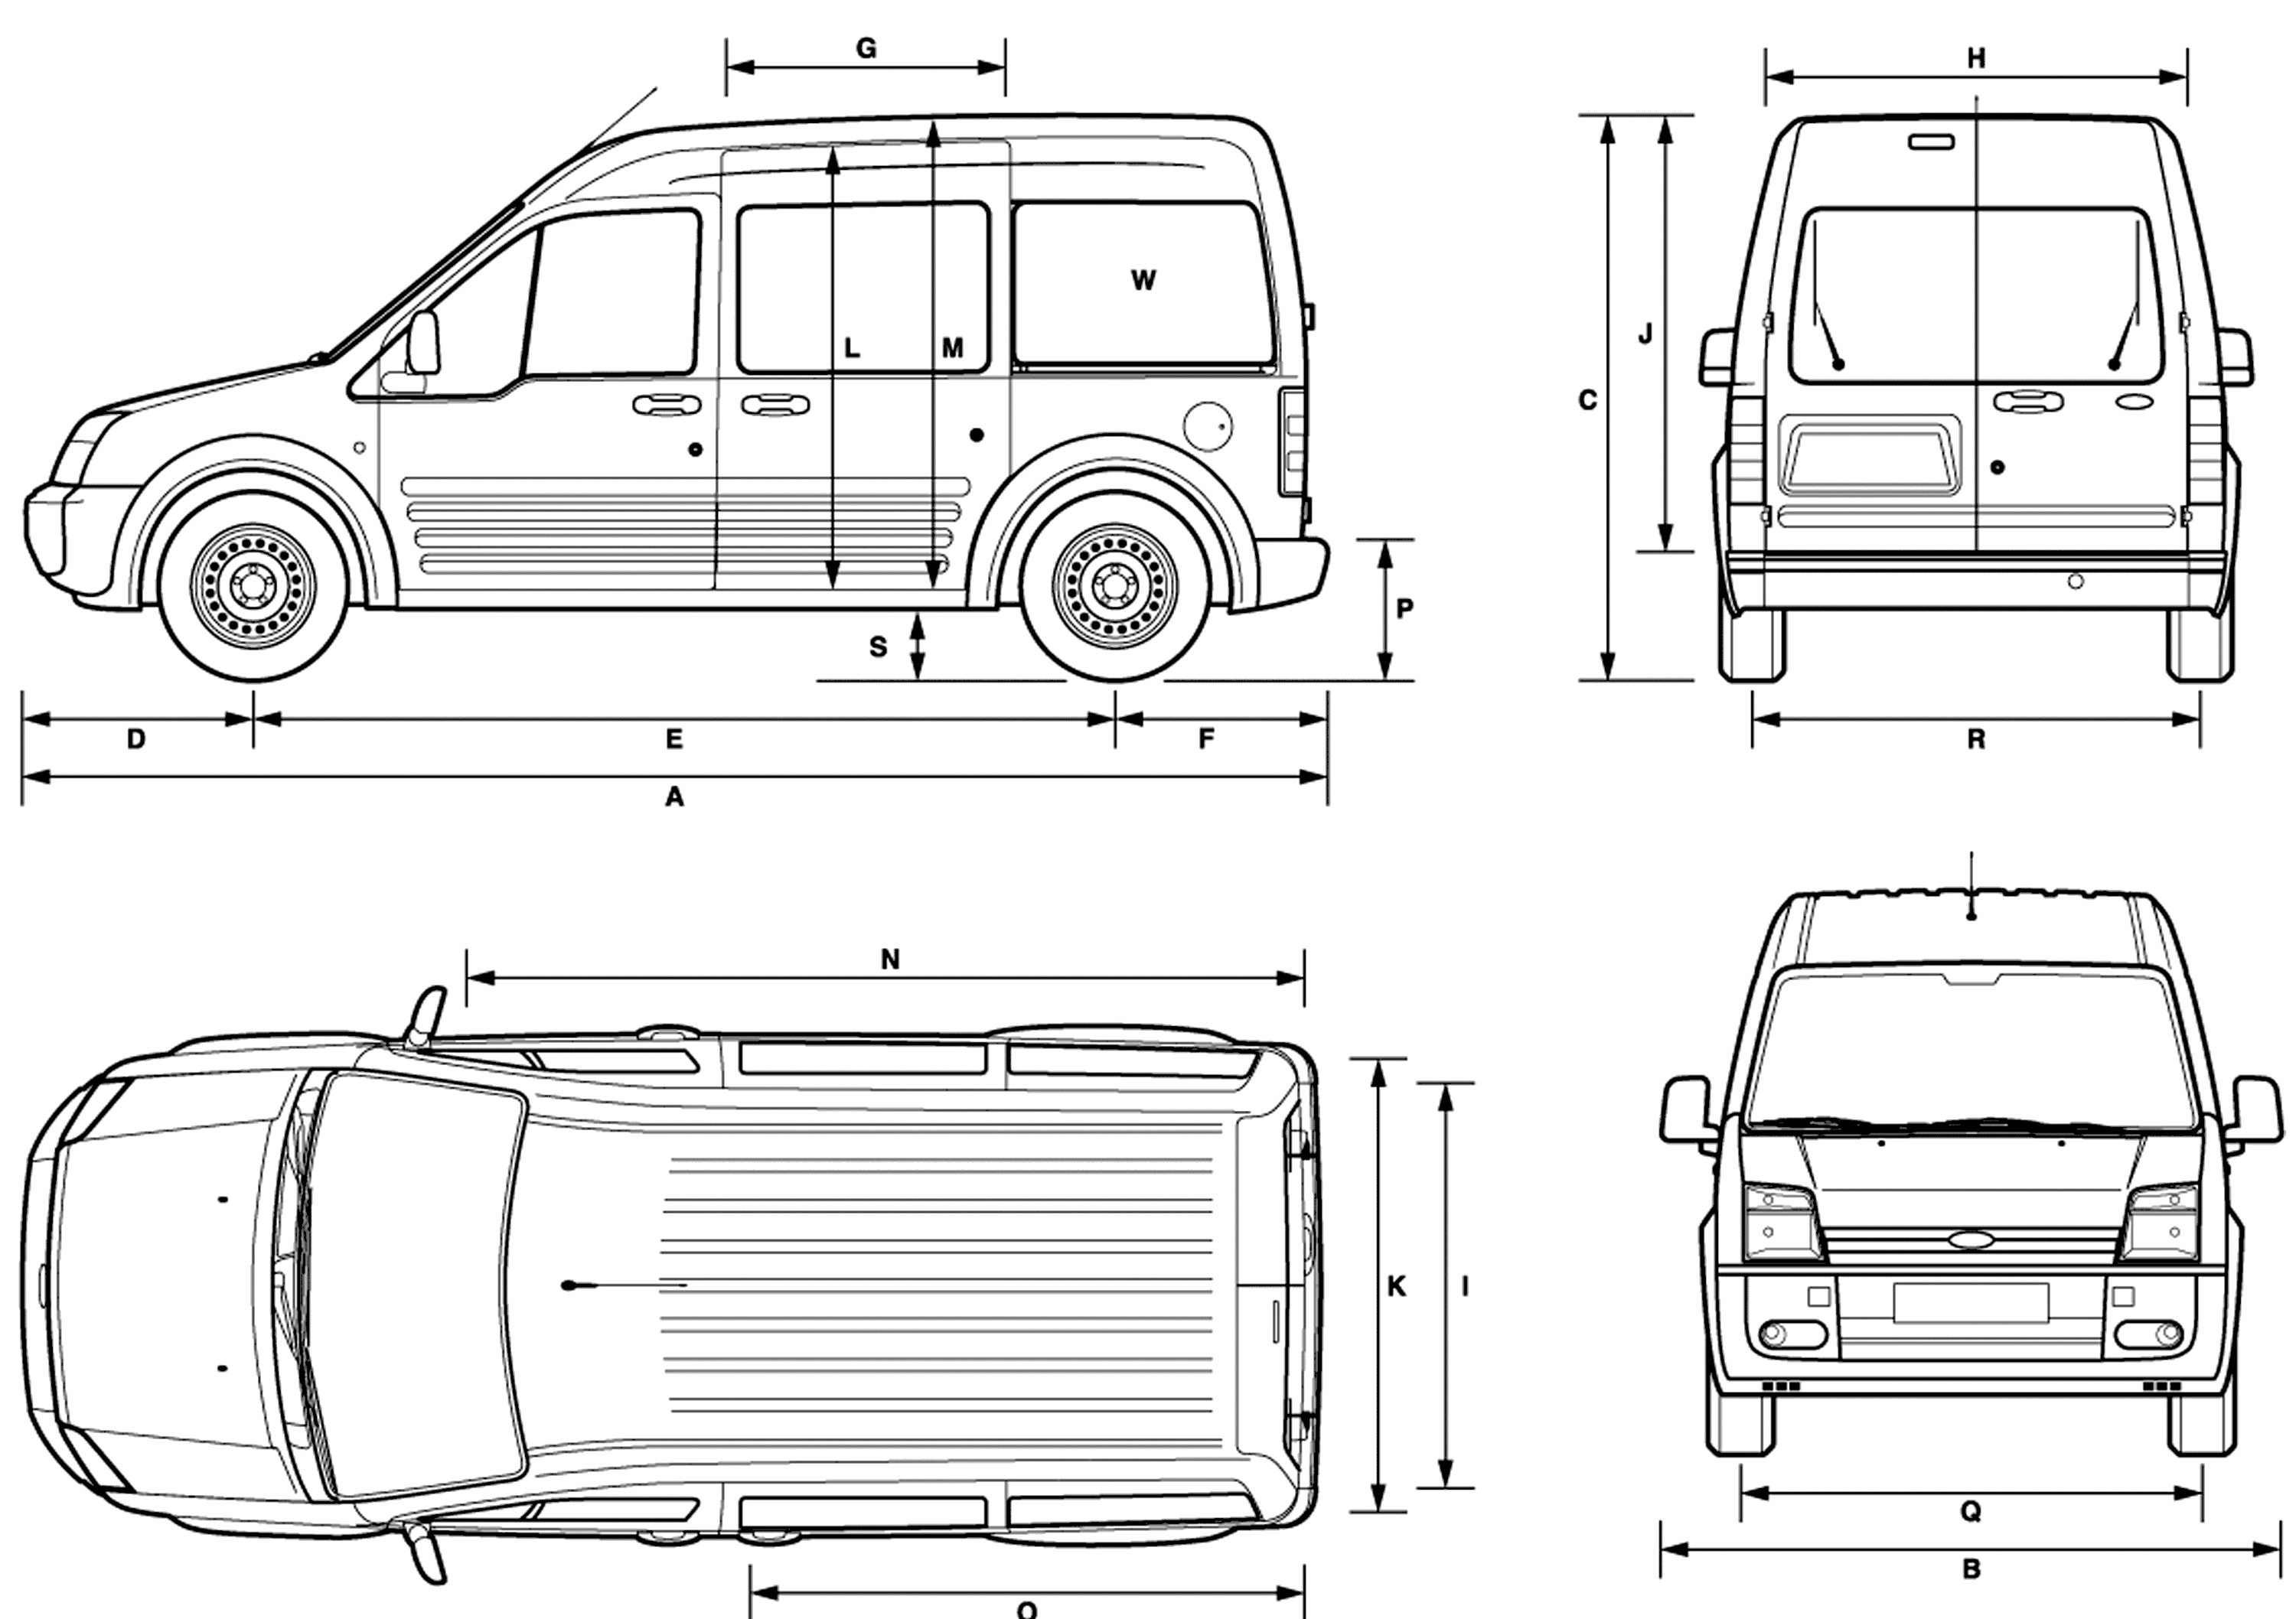 Ford Taurus — Википедия